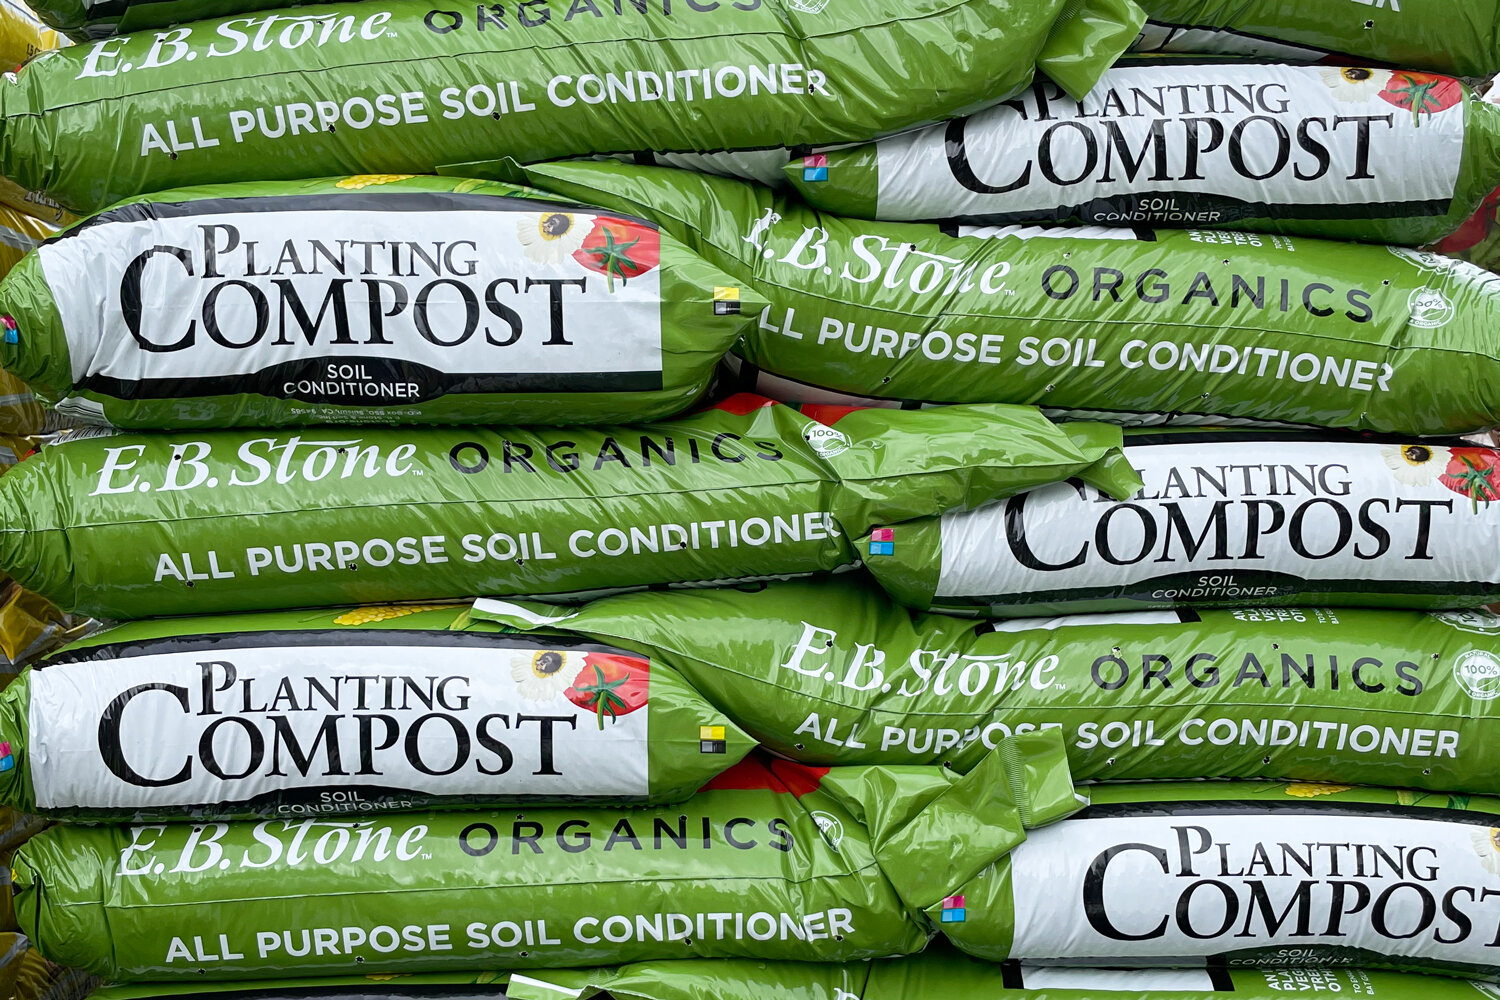 E.B. Stone Organics Planting Compost